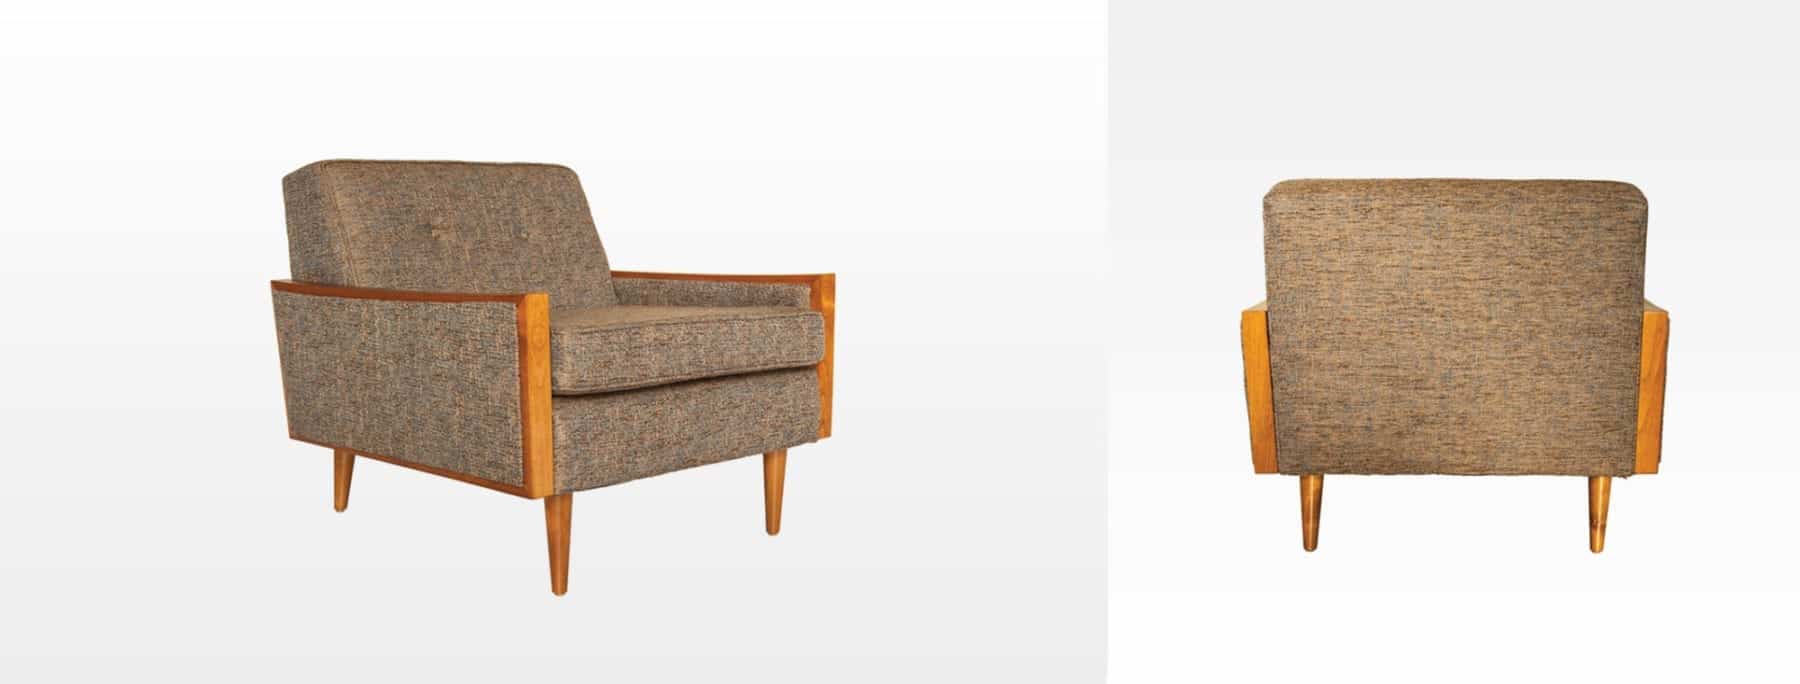 MCM Chair, vintage chair, Mid Century Modern Chair | affordable mid century modern furniture